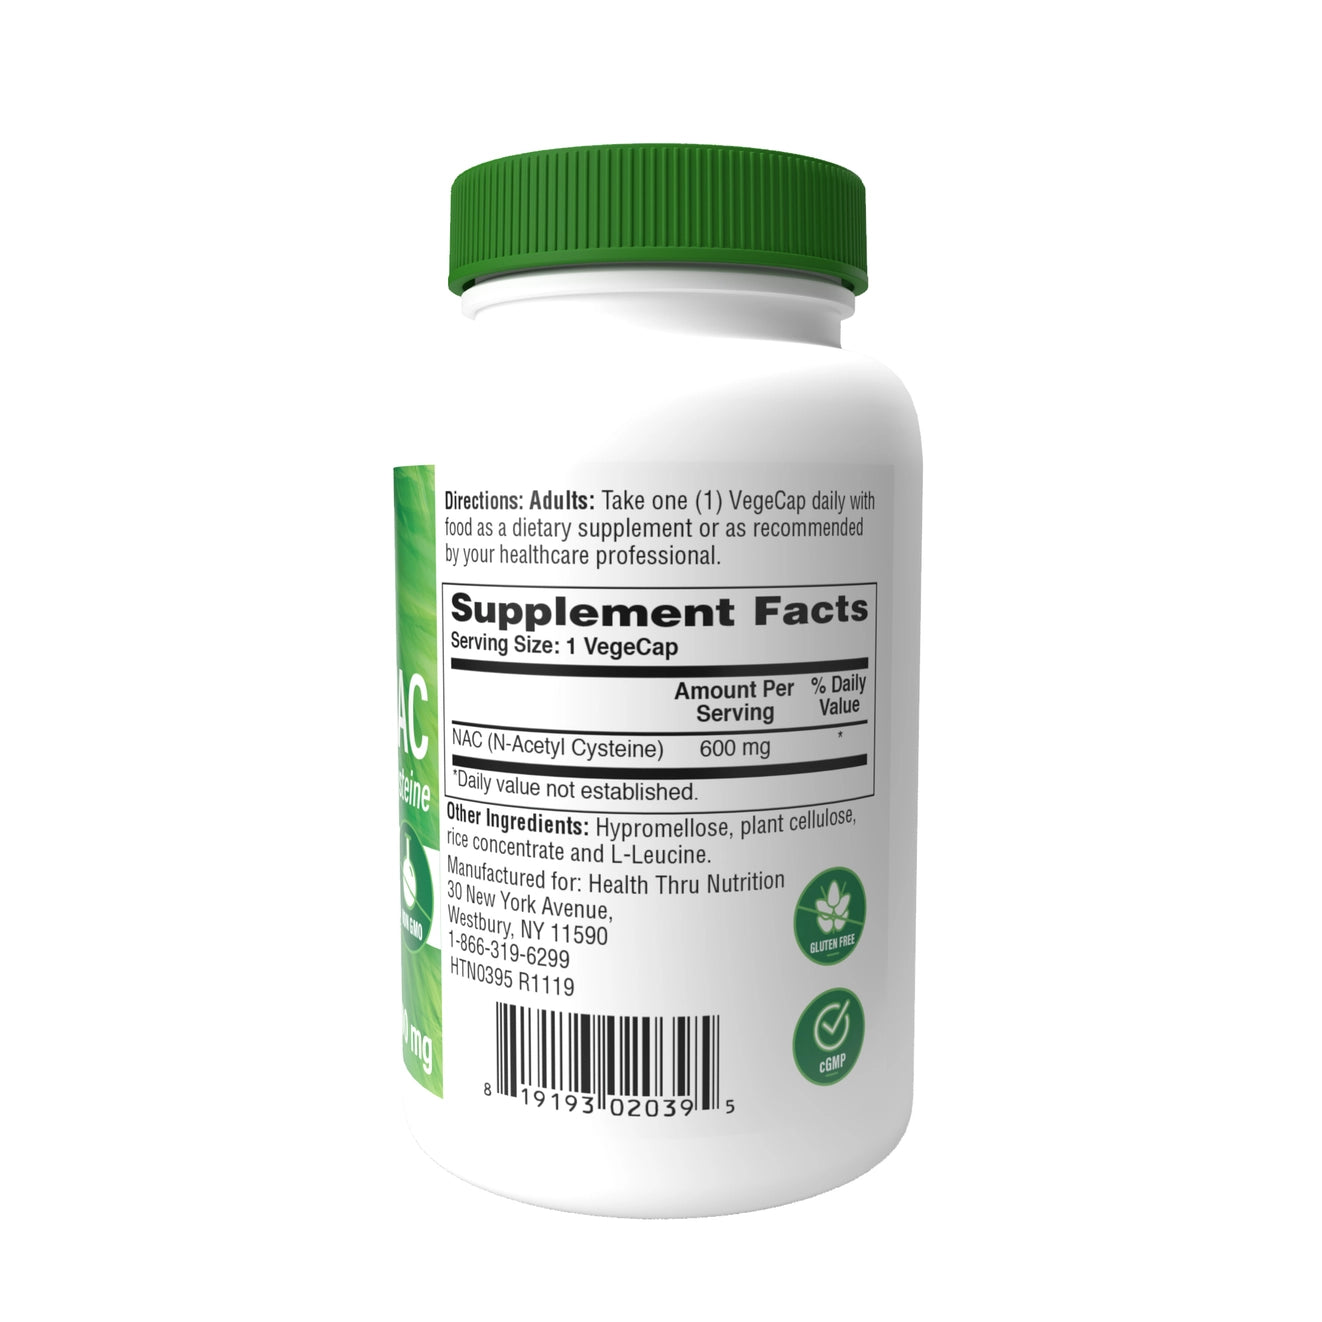 Health thru nutrition N-acétyl cystéine (NAC) - 600mg, 120 capsules